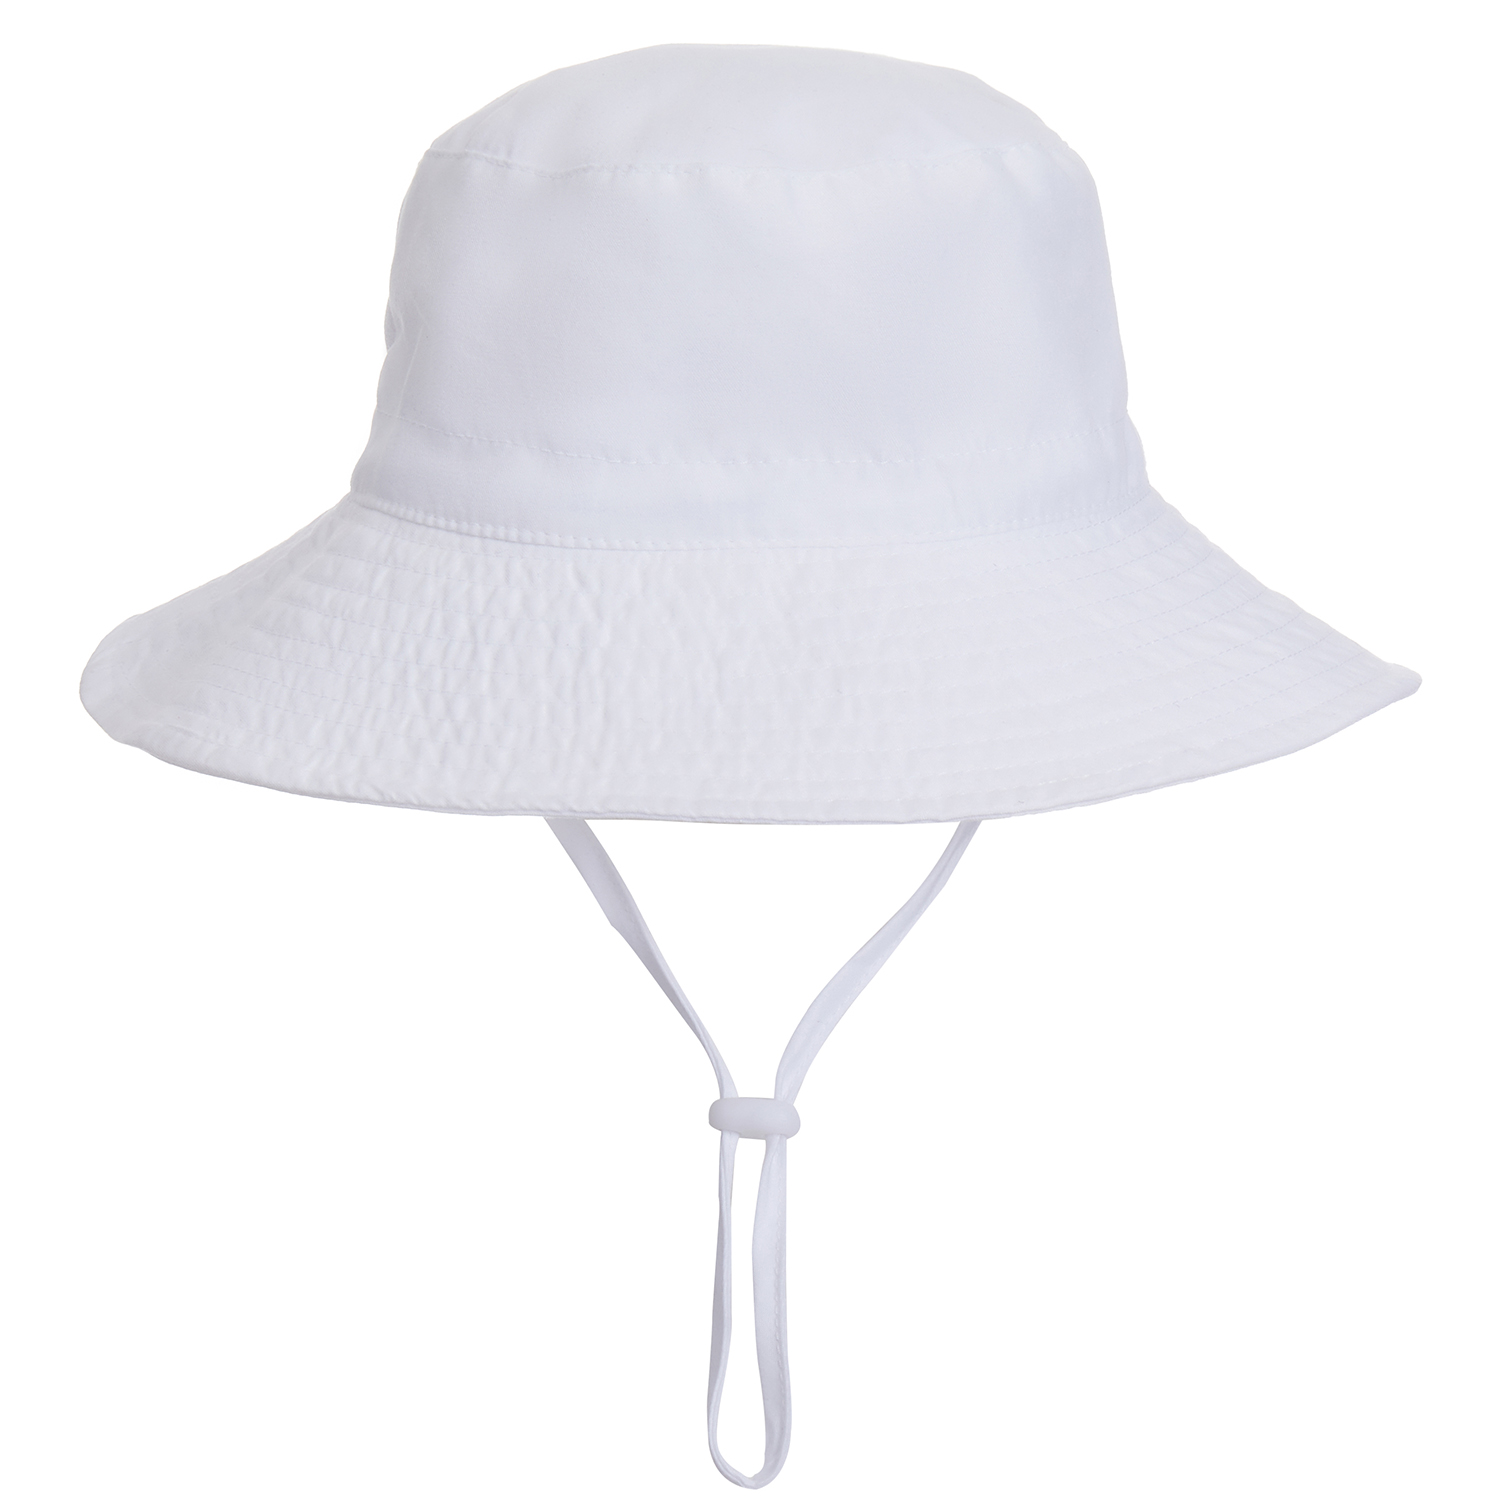 DANMY Baby Sun Hat, Summer Beach UPF 50 Sun Protection India